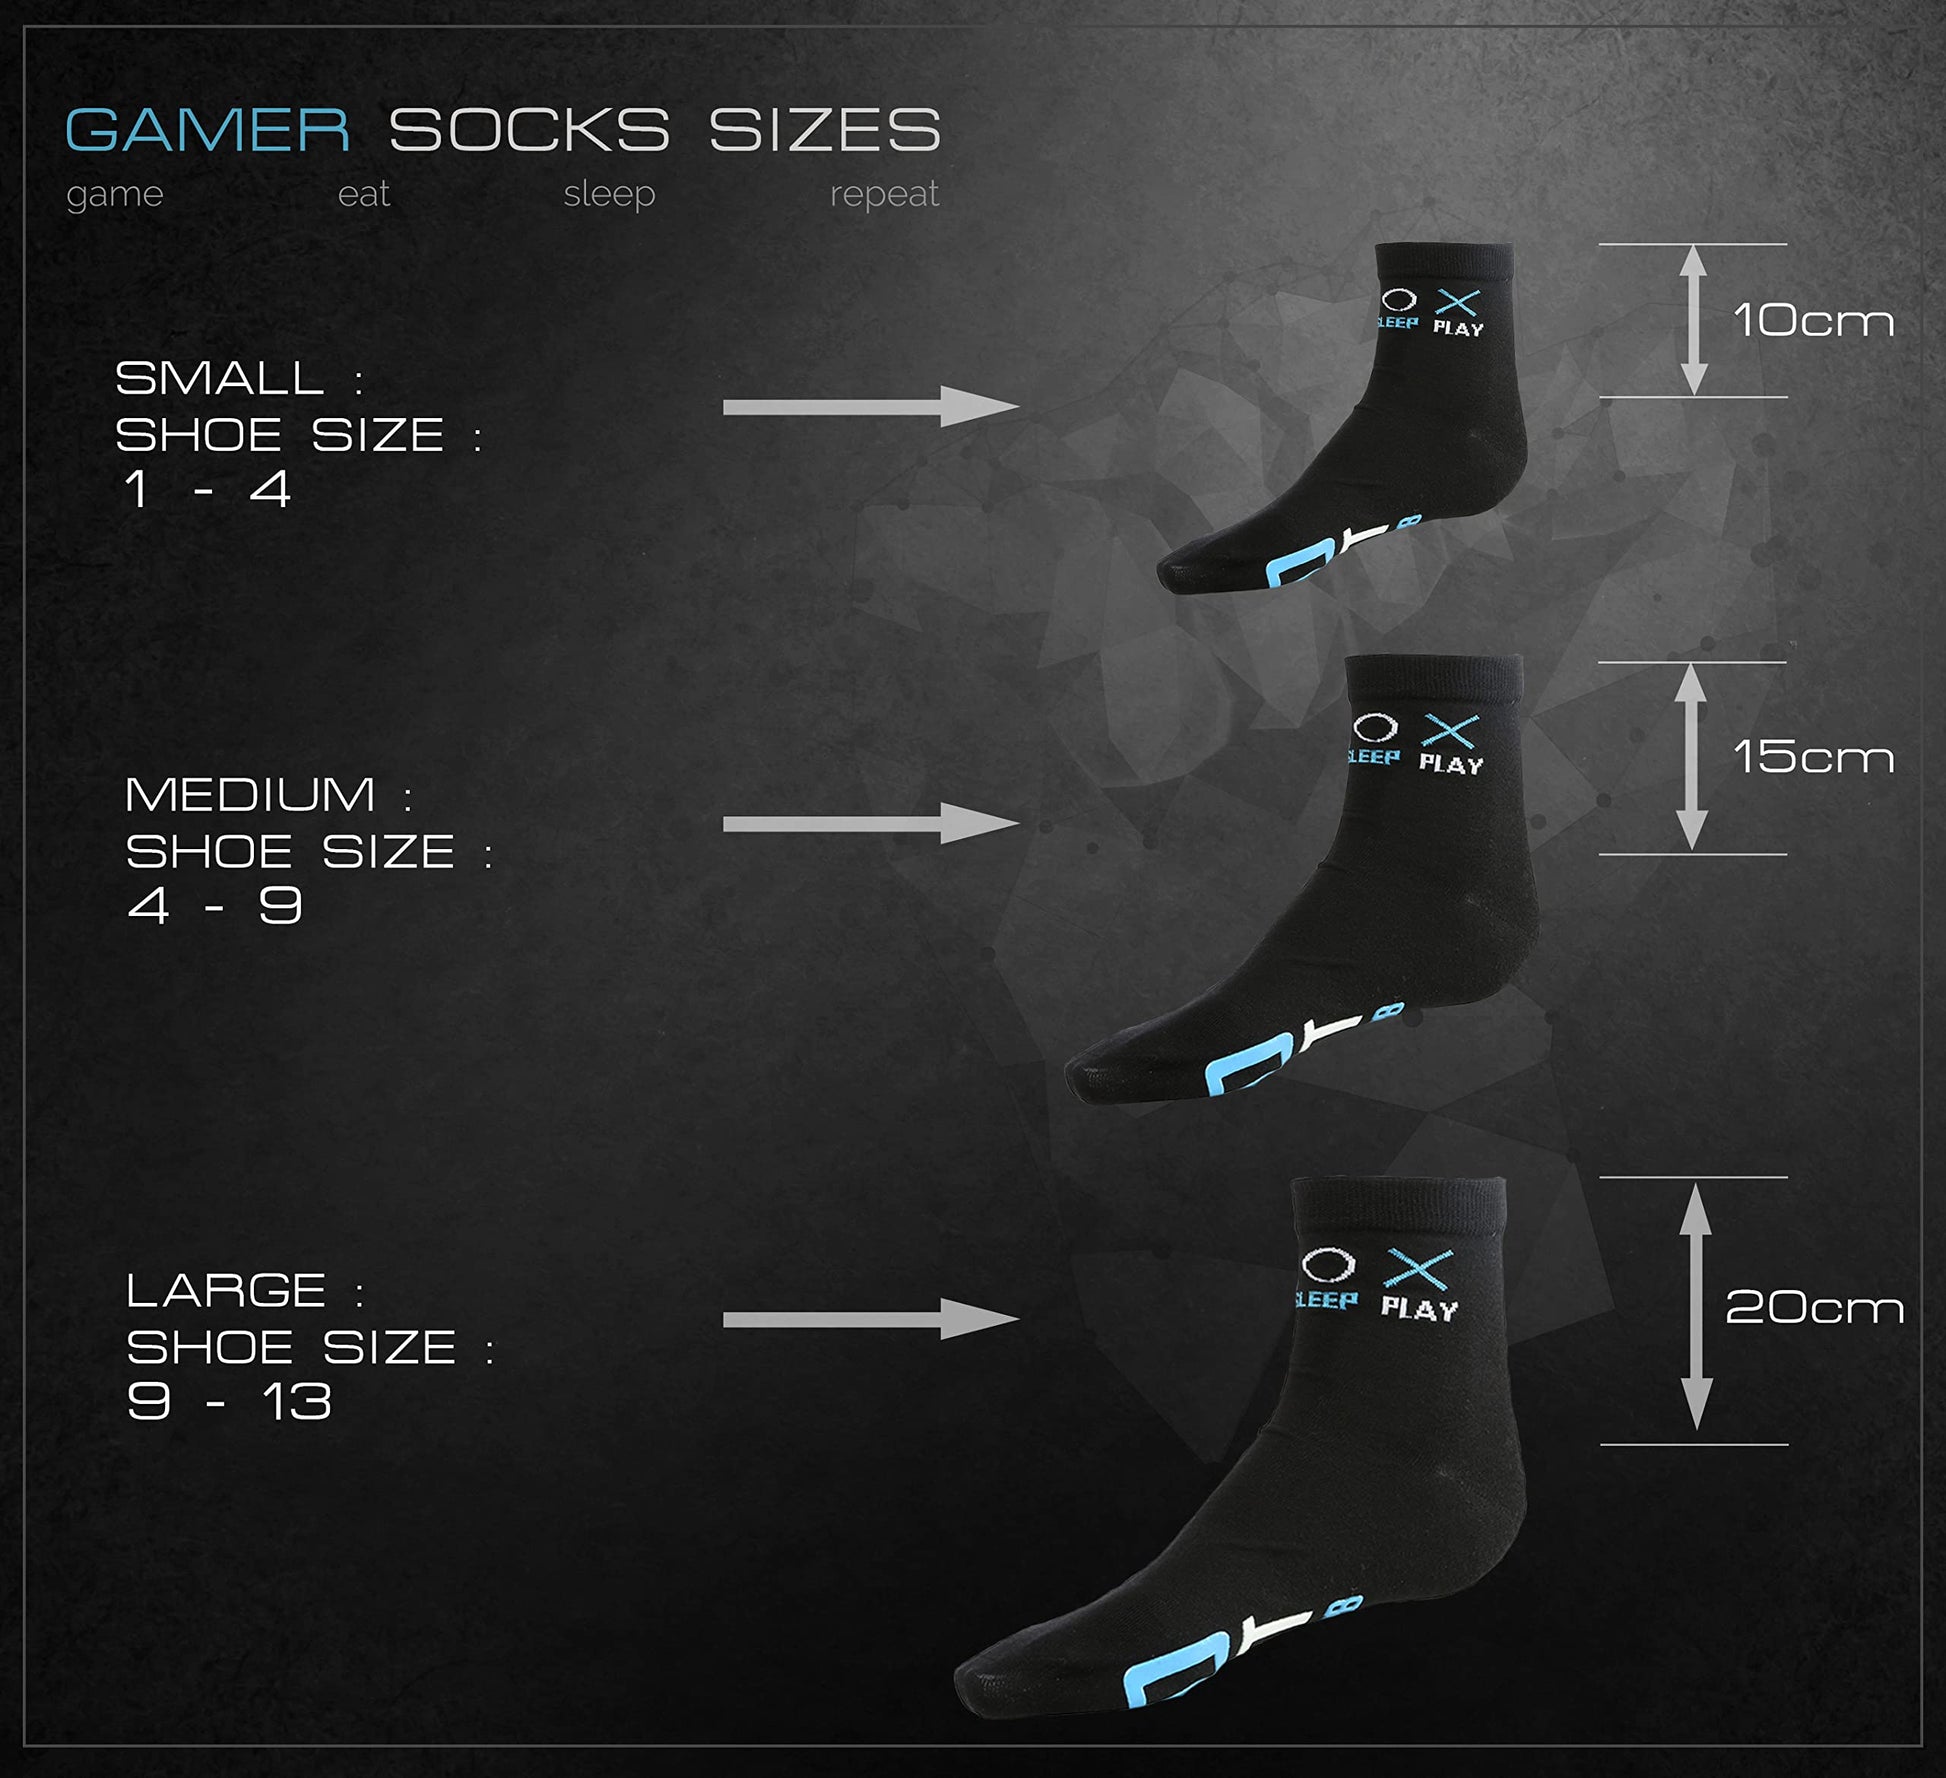 Gamer Gaming Socks Do not disturb Im Gaming Socks for Men, Boys and Teens, Gifts, Fun Socks and Novelty Gifts (as1, numeric, numeric_5, numeric_10, Blue DND) - amzGamess